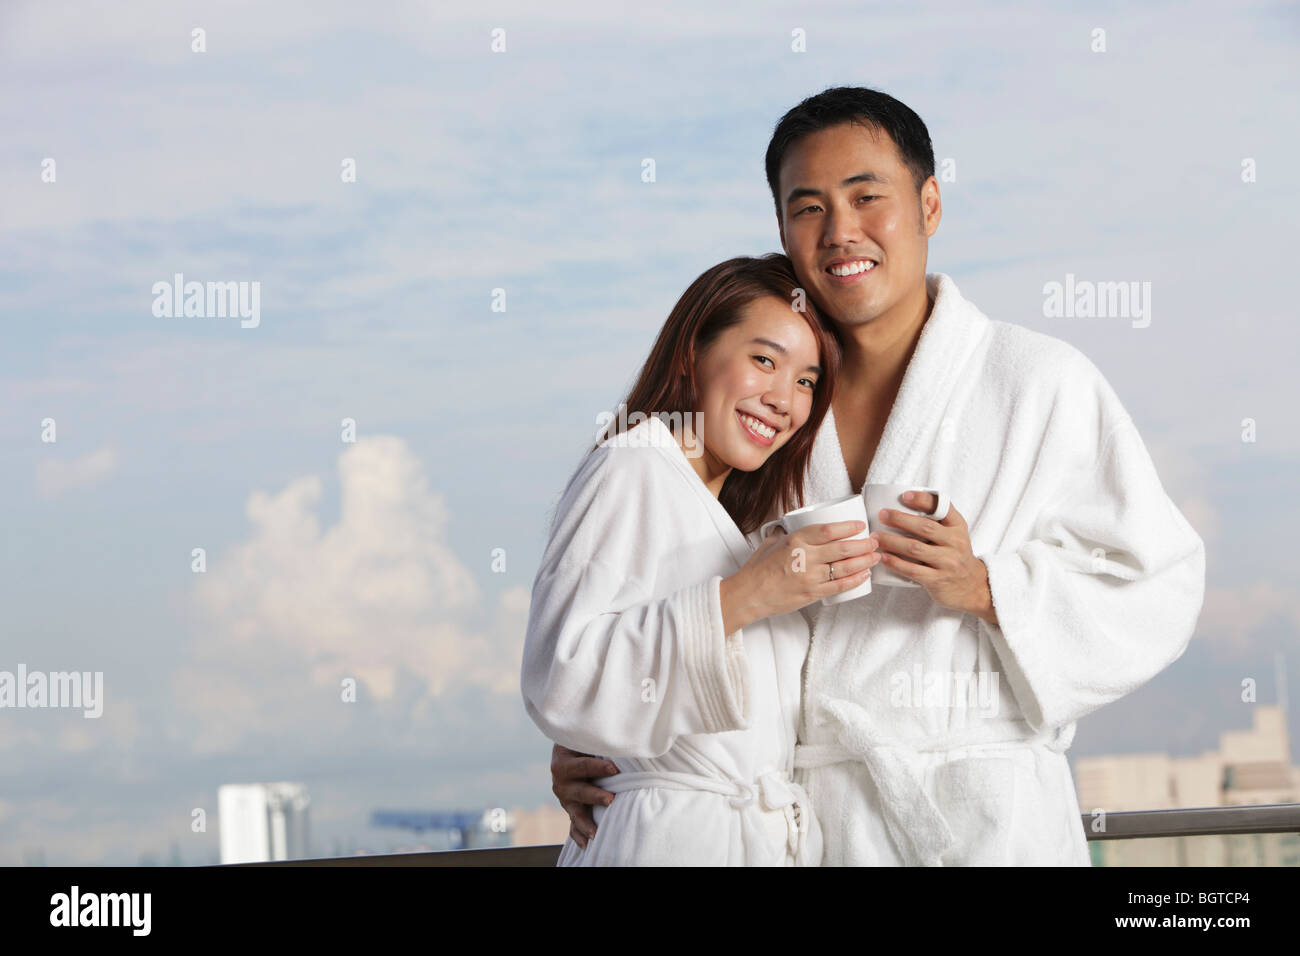 Jeune couple dans des robes hugging and smiling Banque D'Images